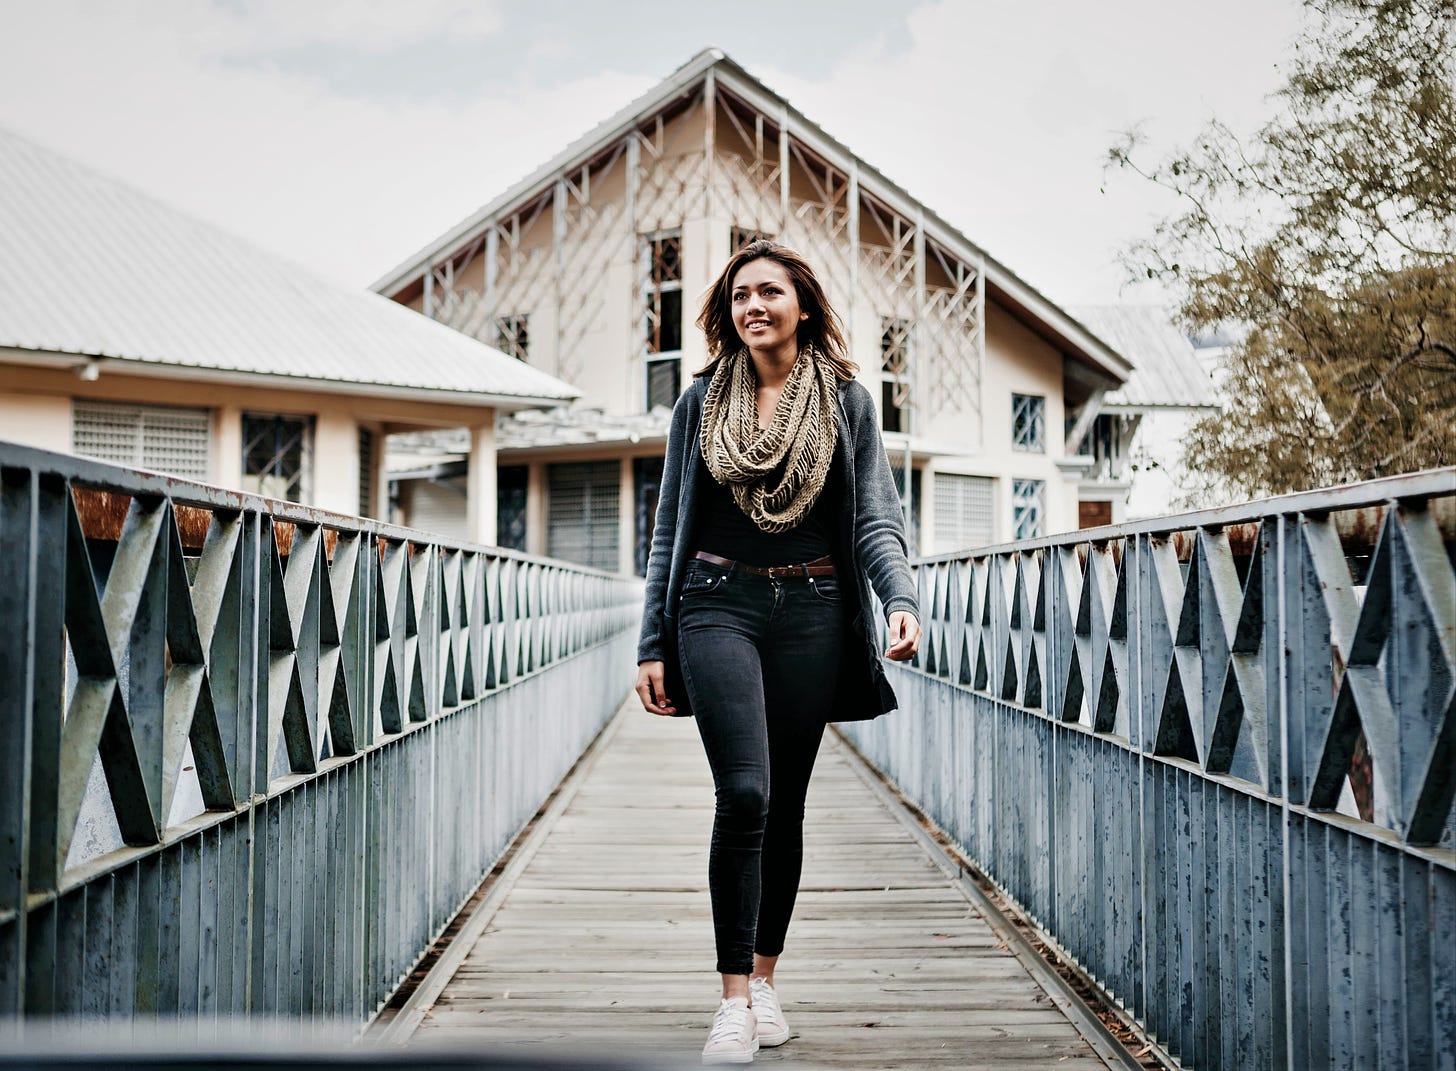 smiling girl with brown hair wearing sweater walking across wooden bridge